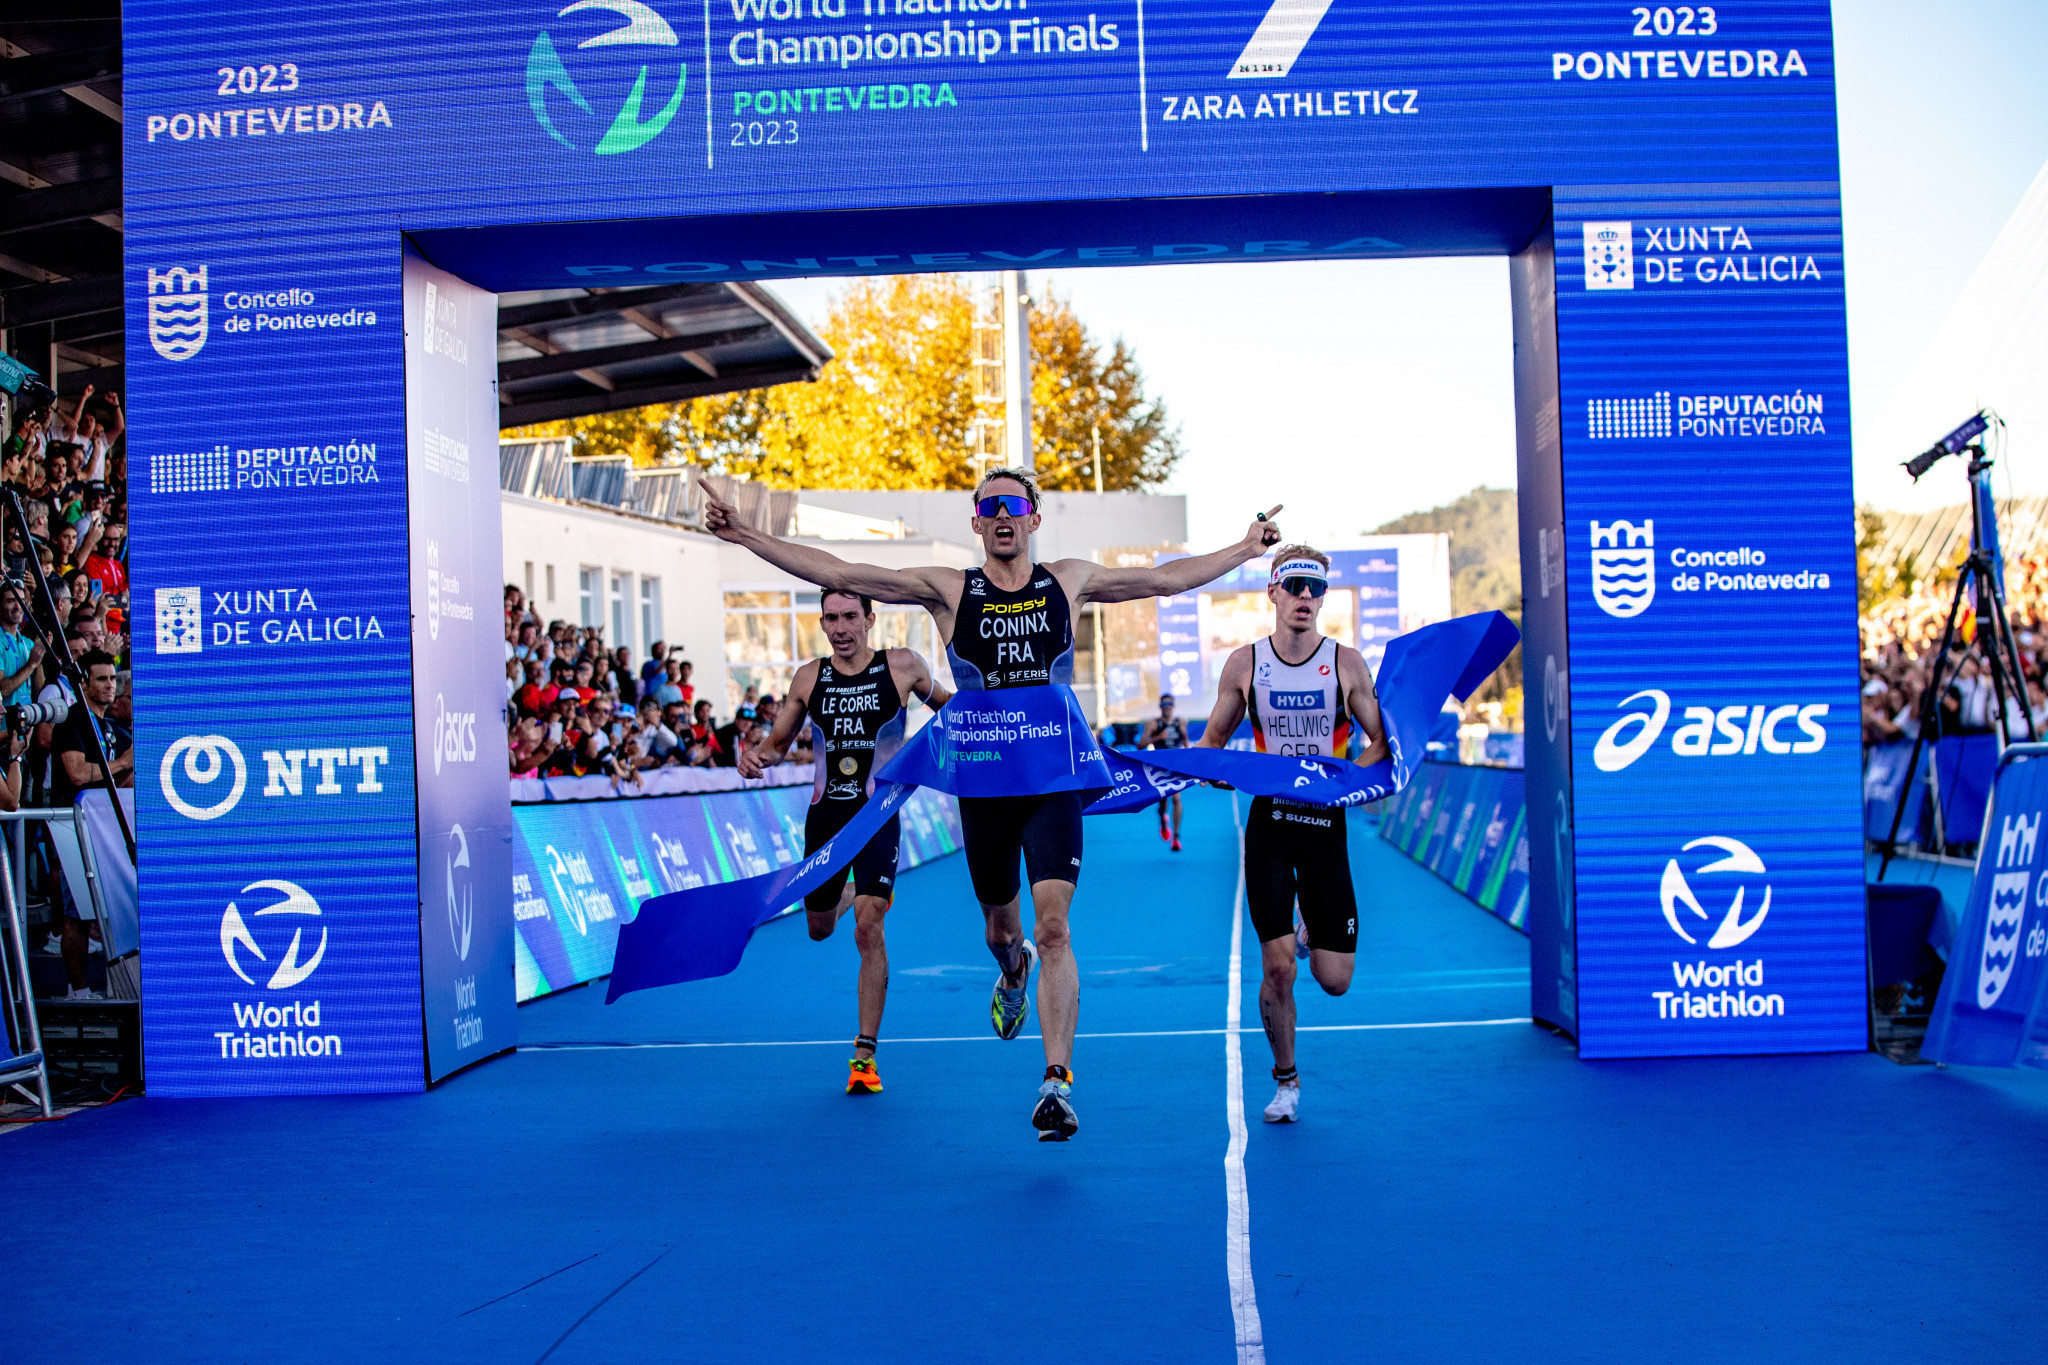 Coninx prevails to deny Yee and Wilde men's triathlon world title again in Pontevedra